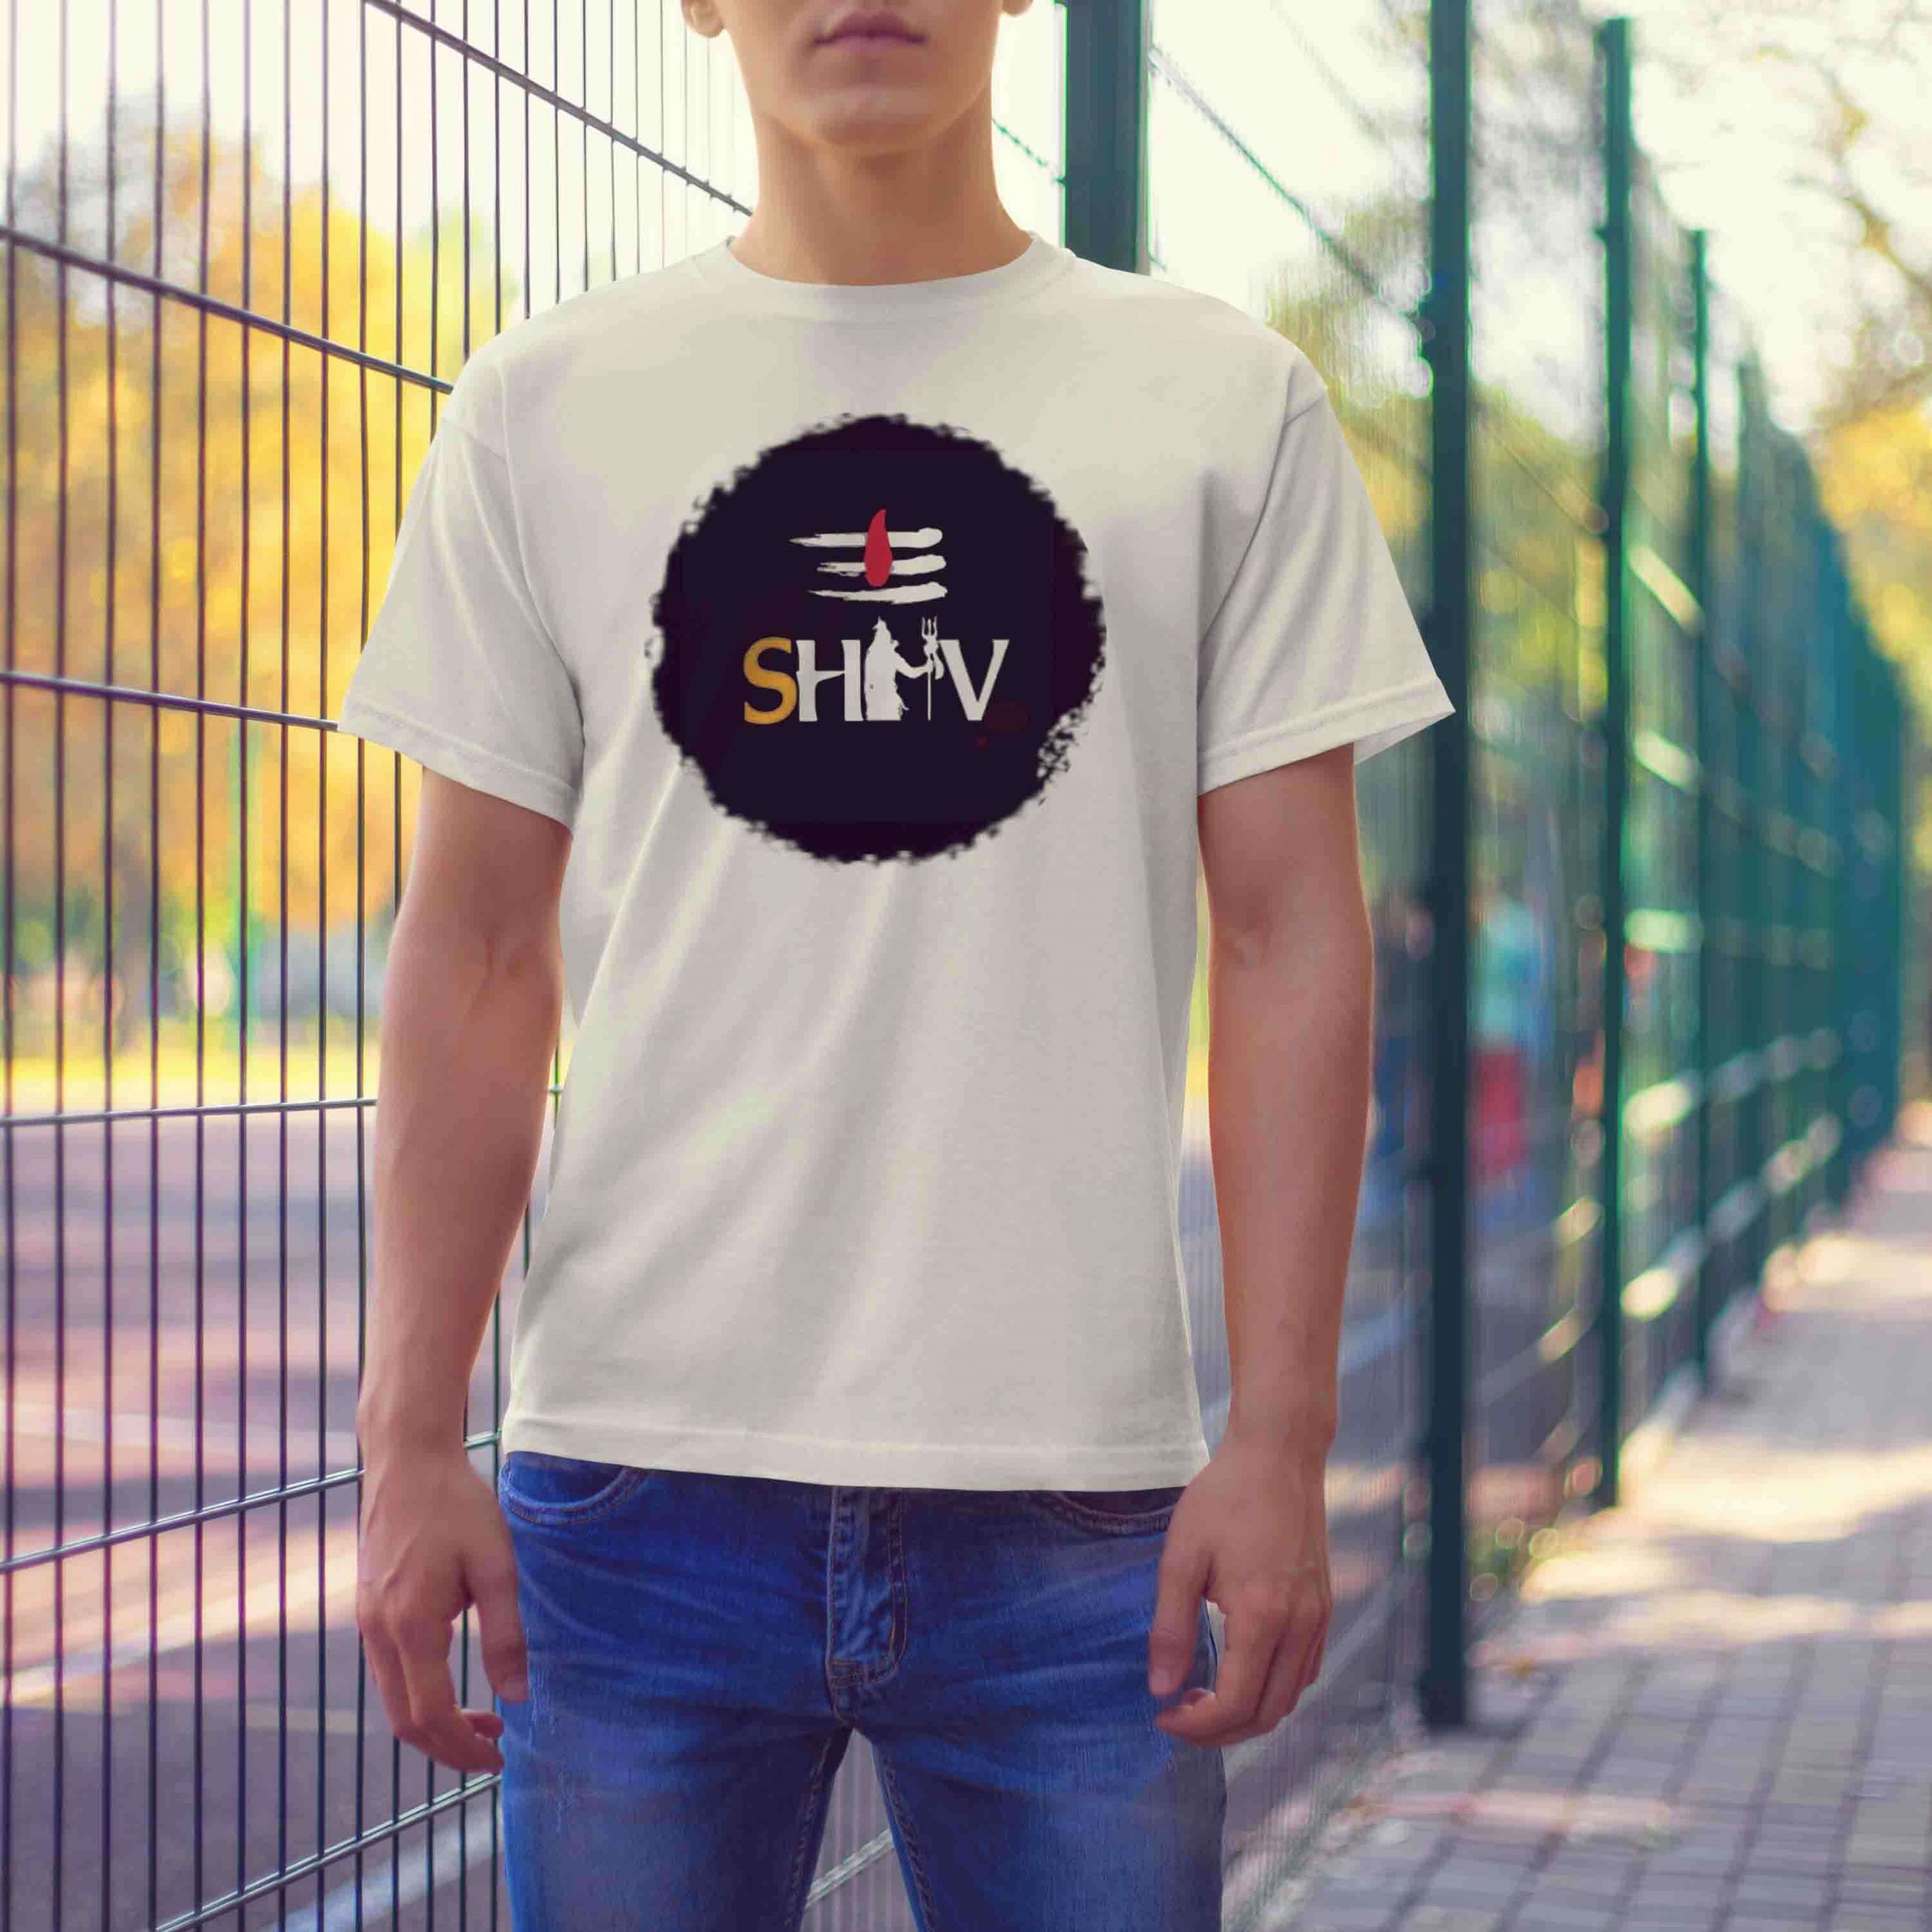 Shiva black background printed white t-shirt